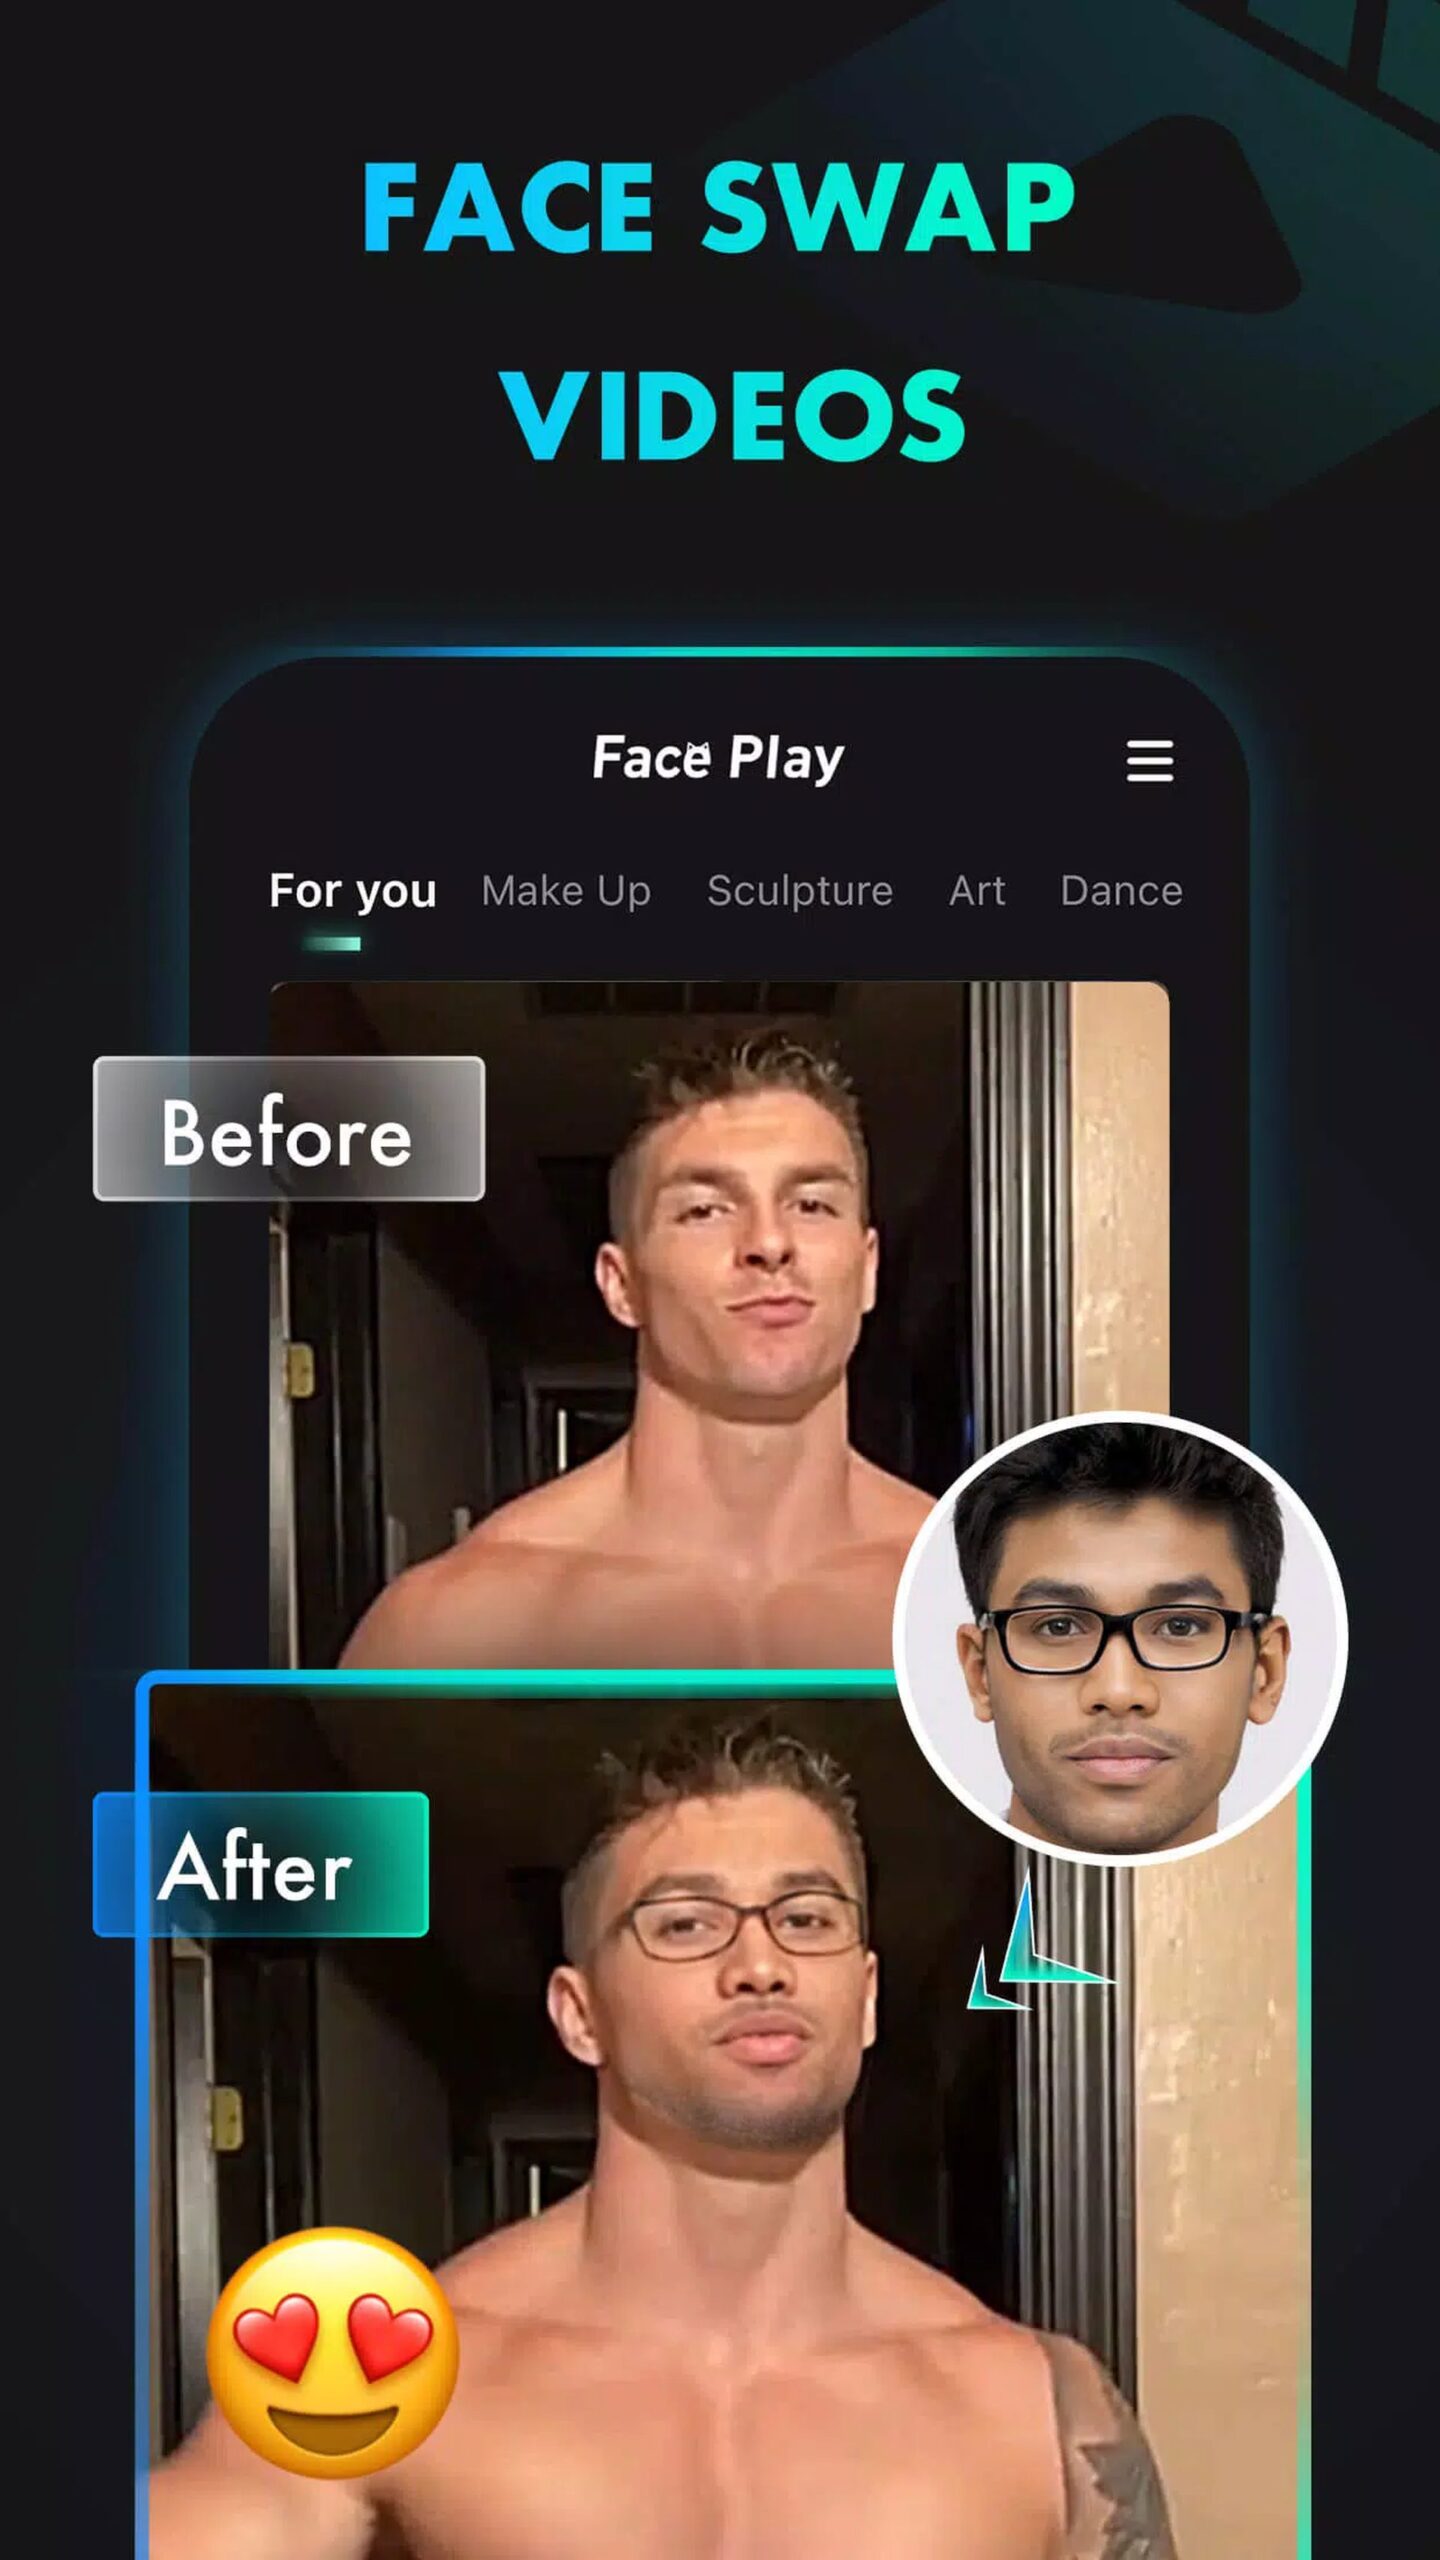 FacePlay